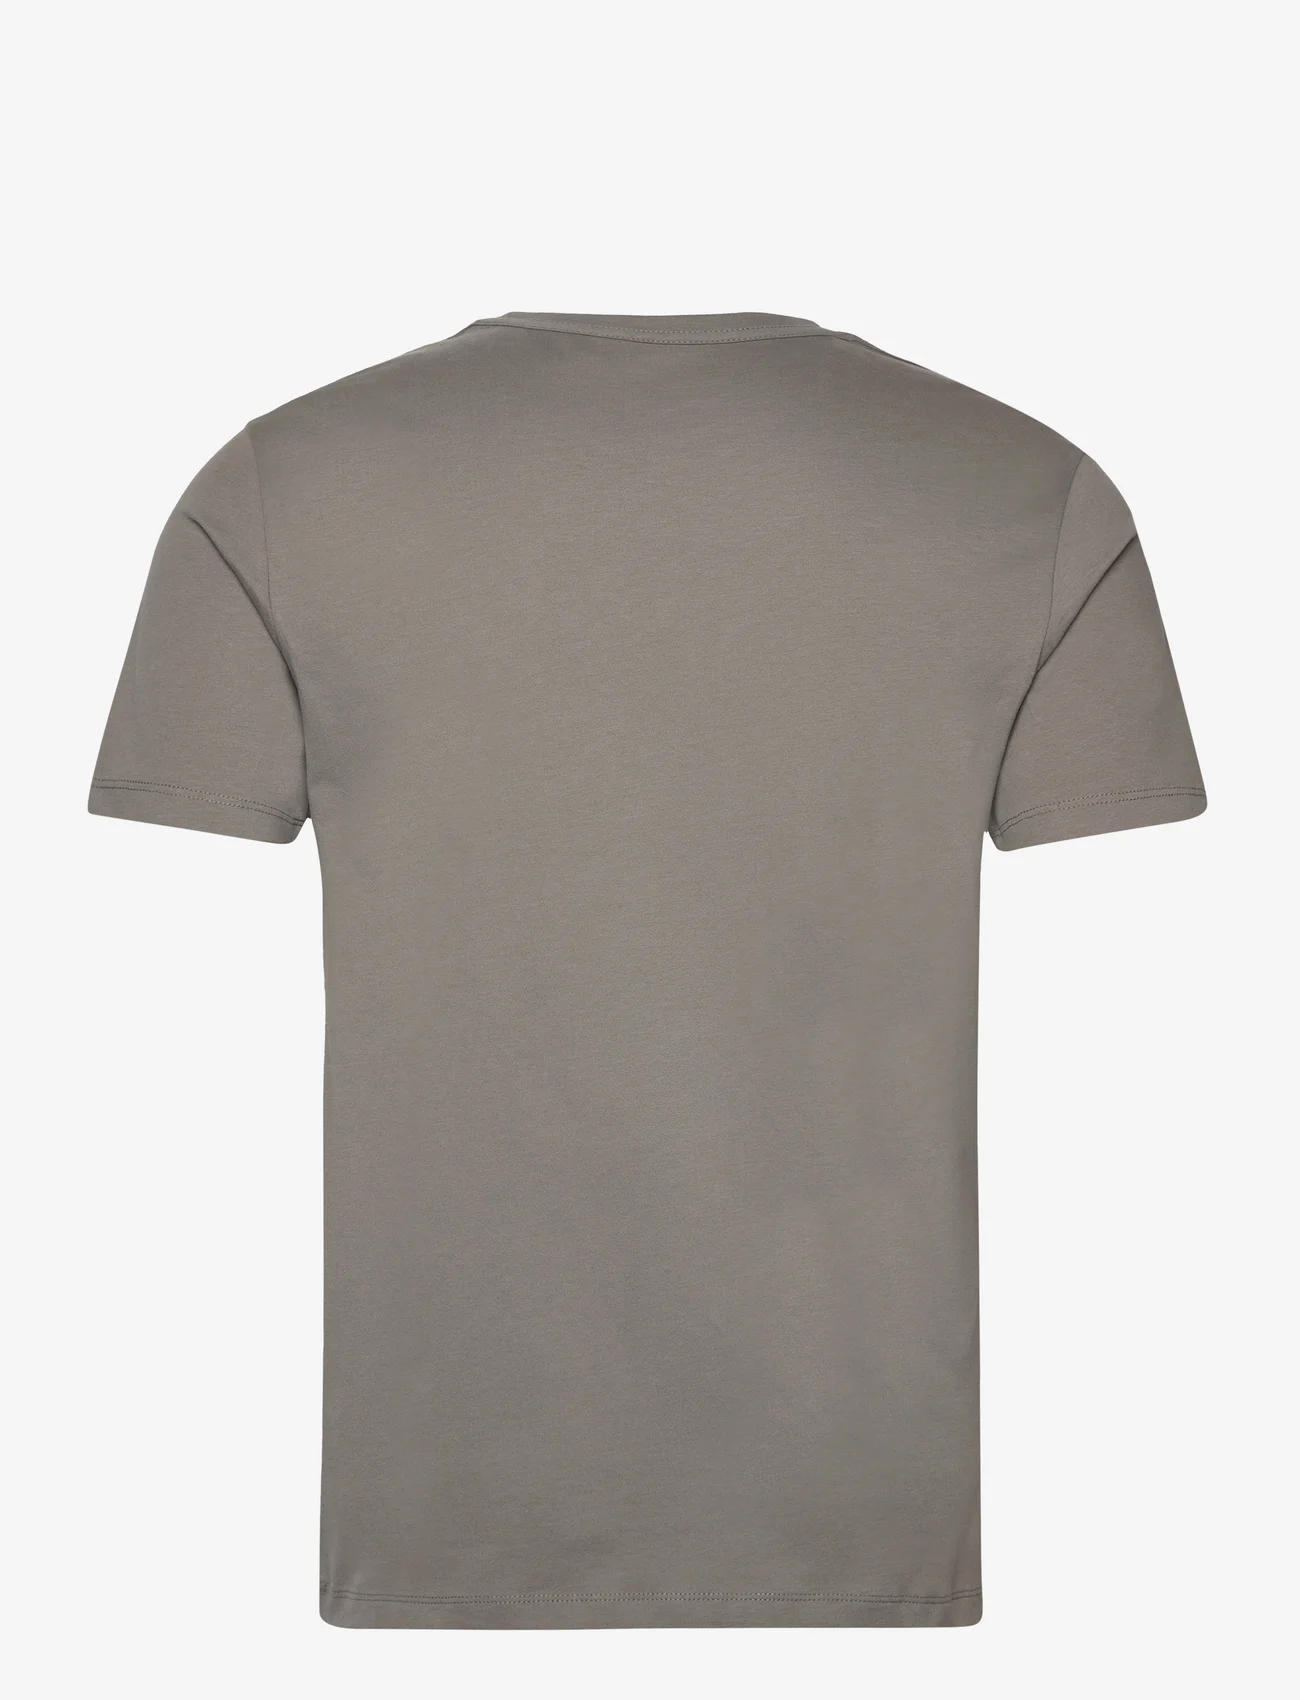 AllSaints - BRACE SS CREW - basic t-shirts - planet grey - 1